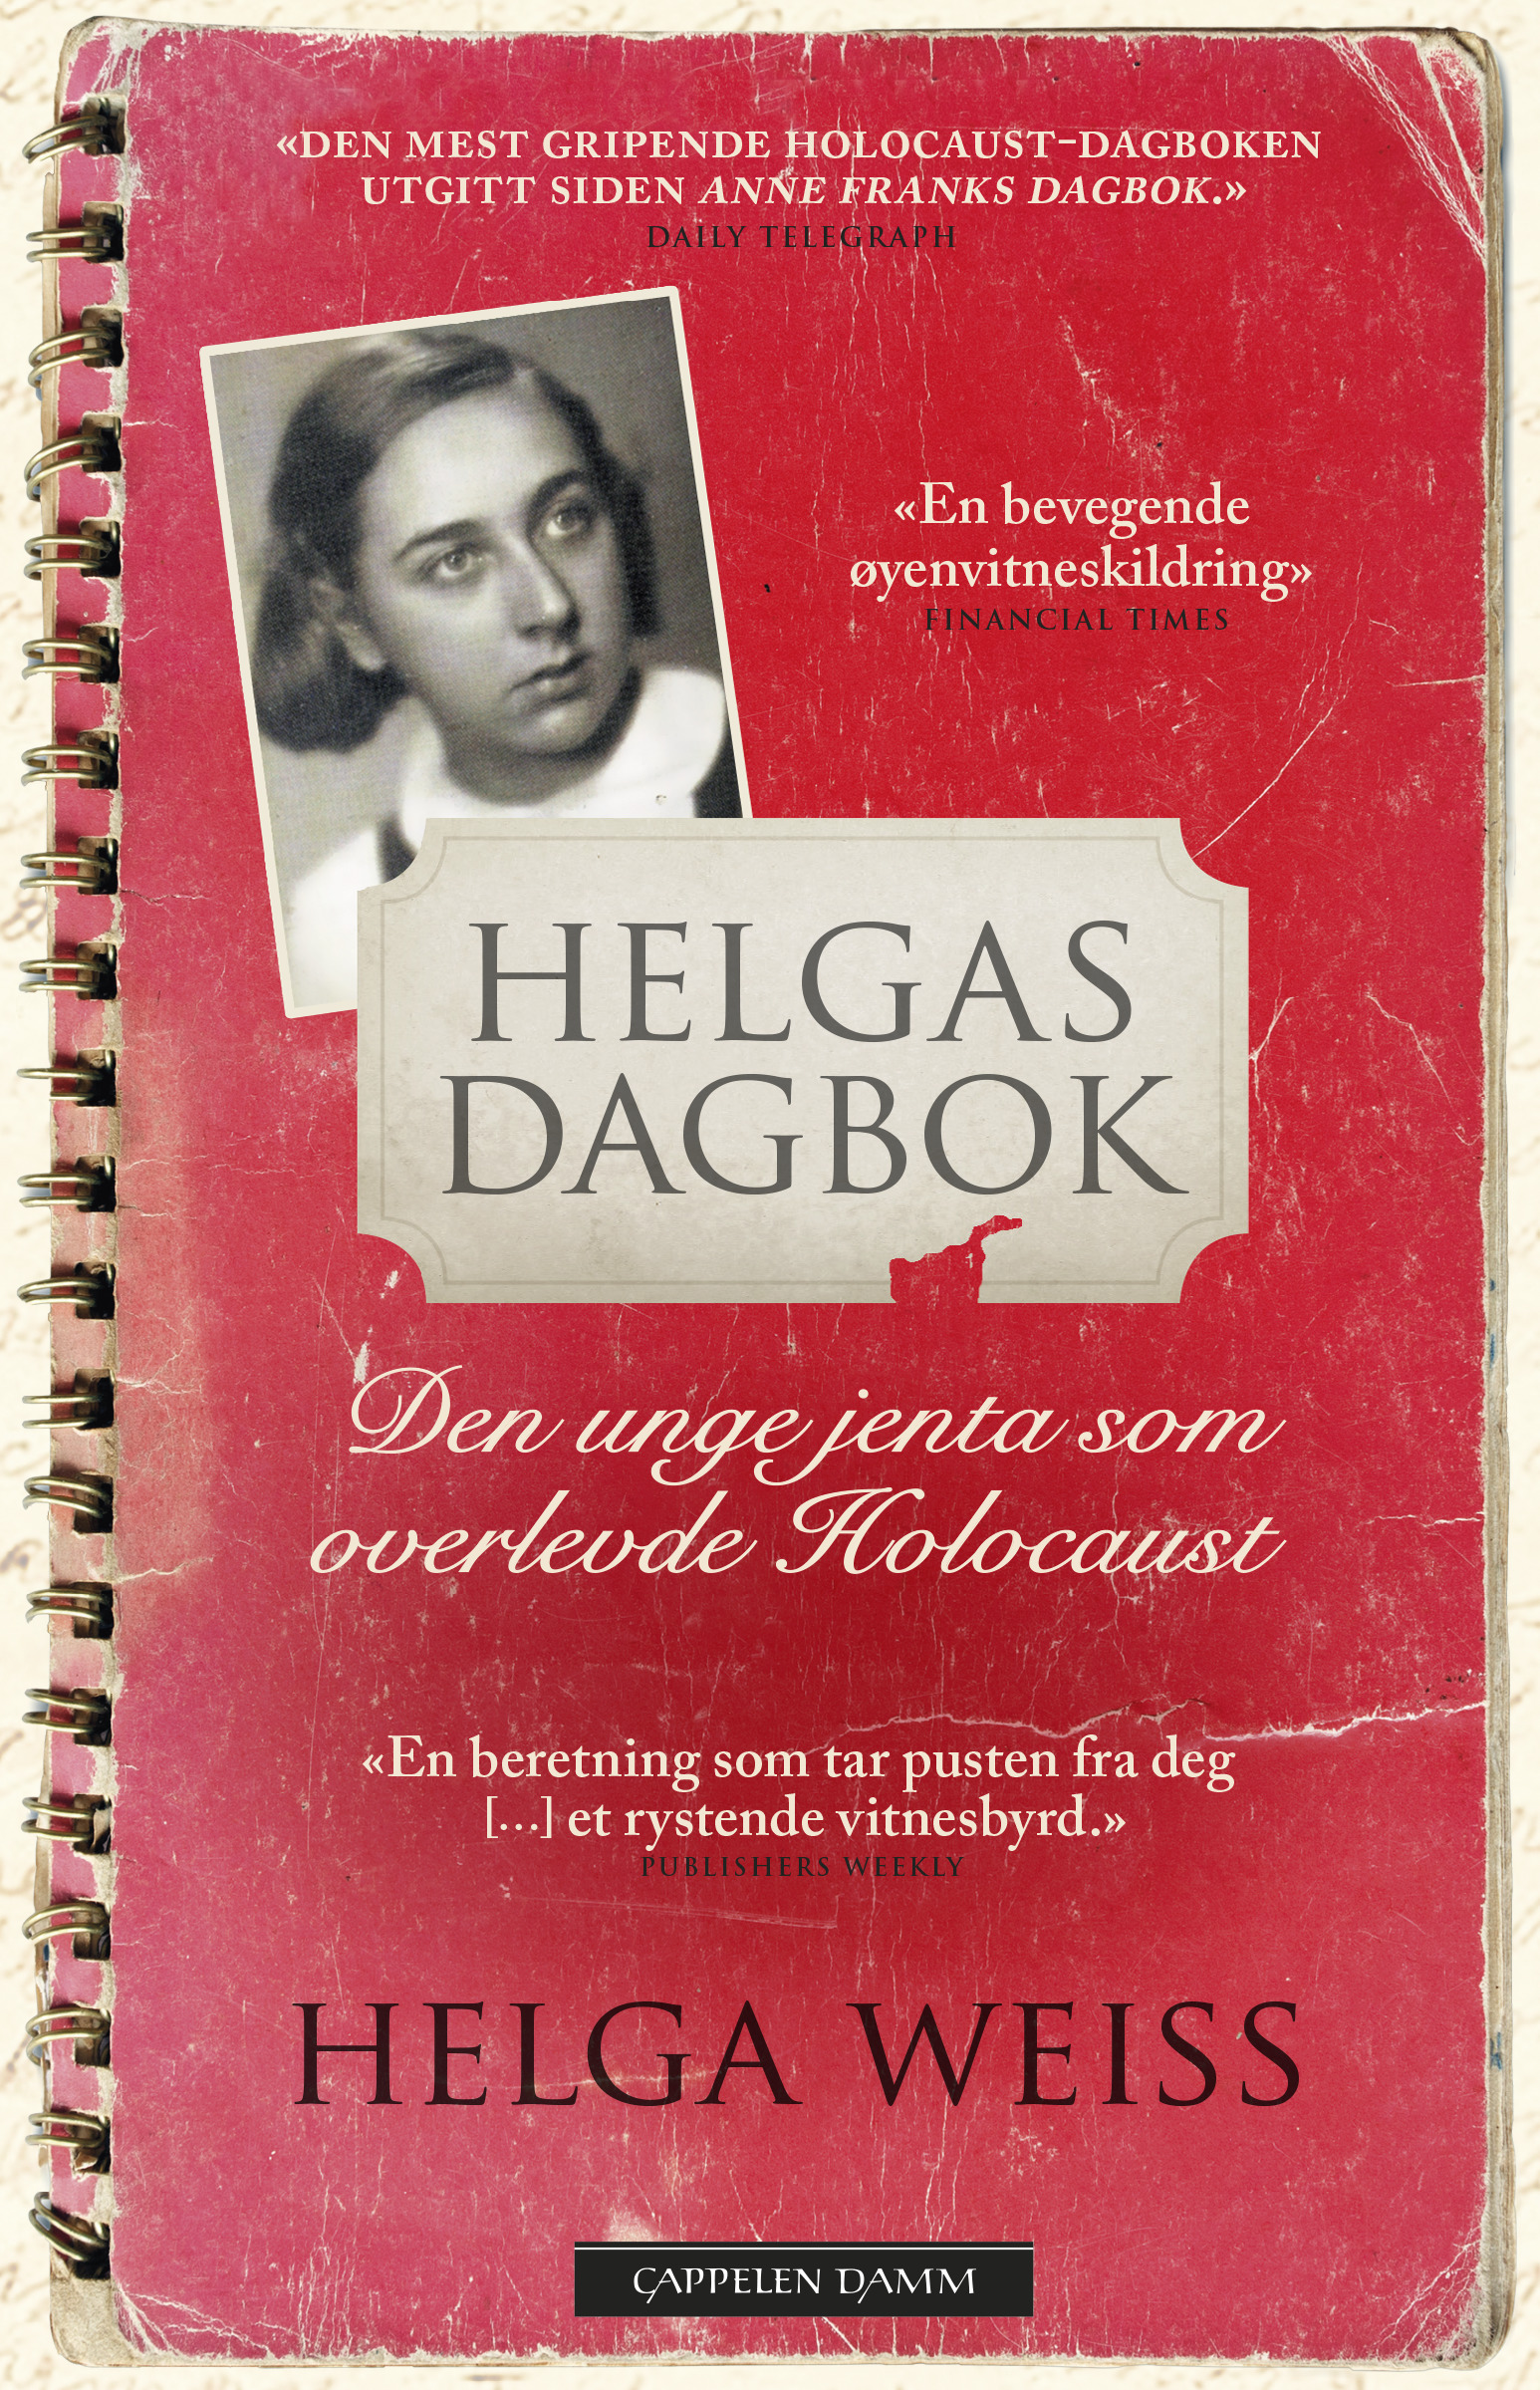 Helga's Diary by Helga Weiss - opmcrazy